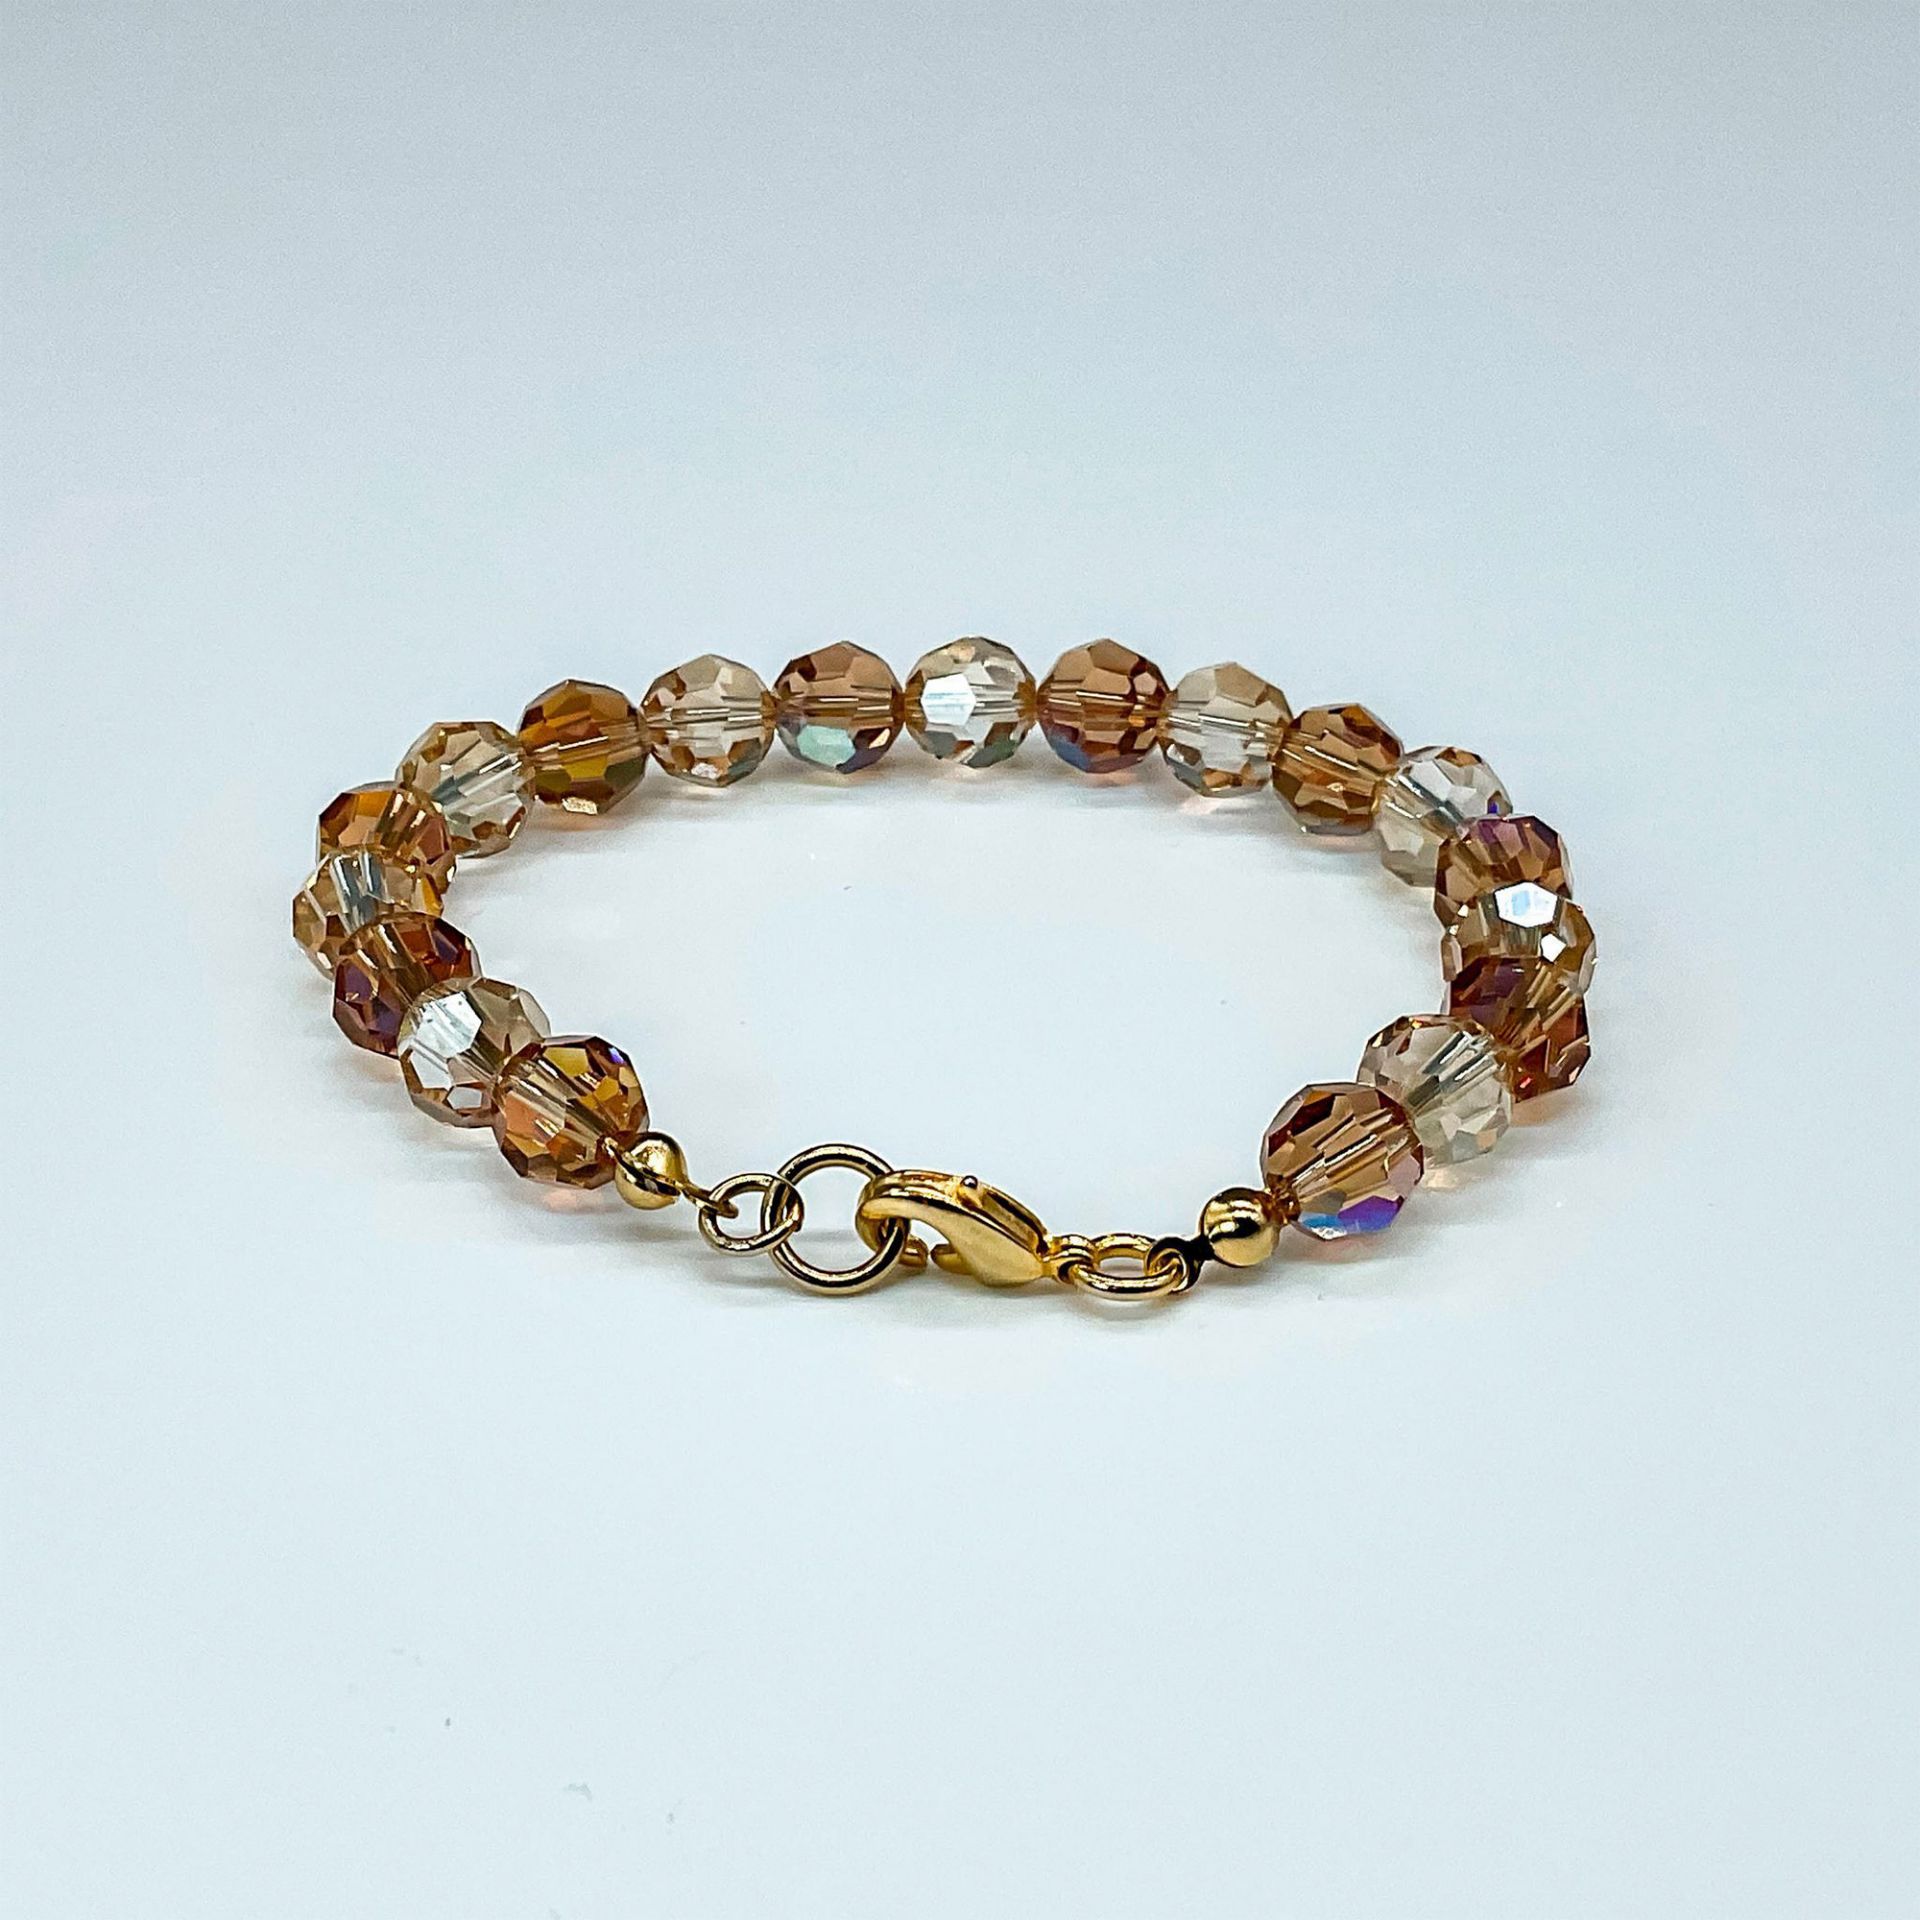 Vintage Earth-Gold Tone Crystal Bead Bracelet - Image 2 of 3